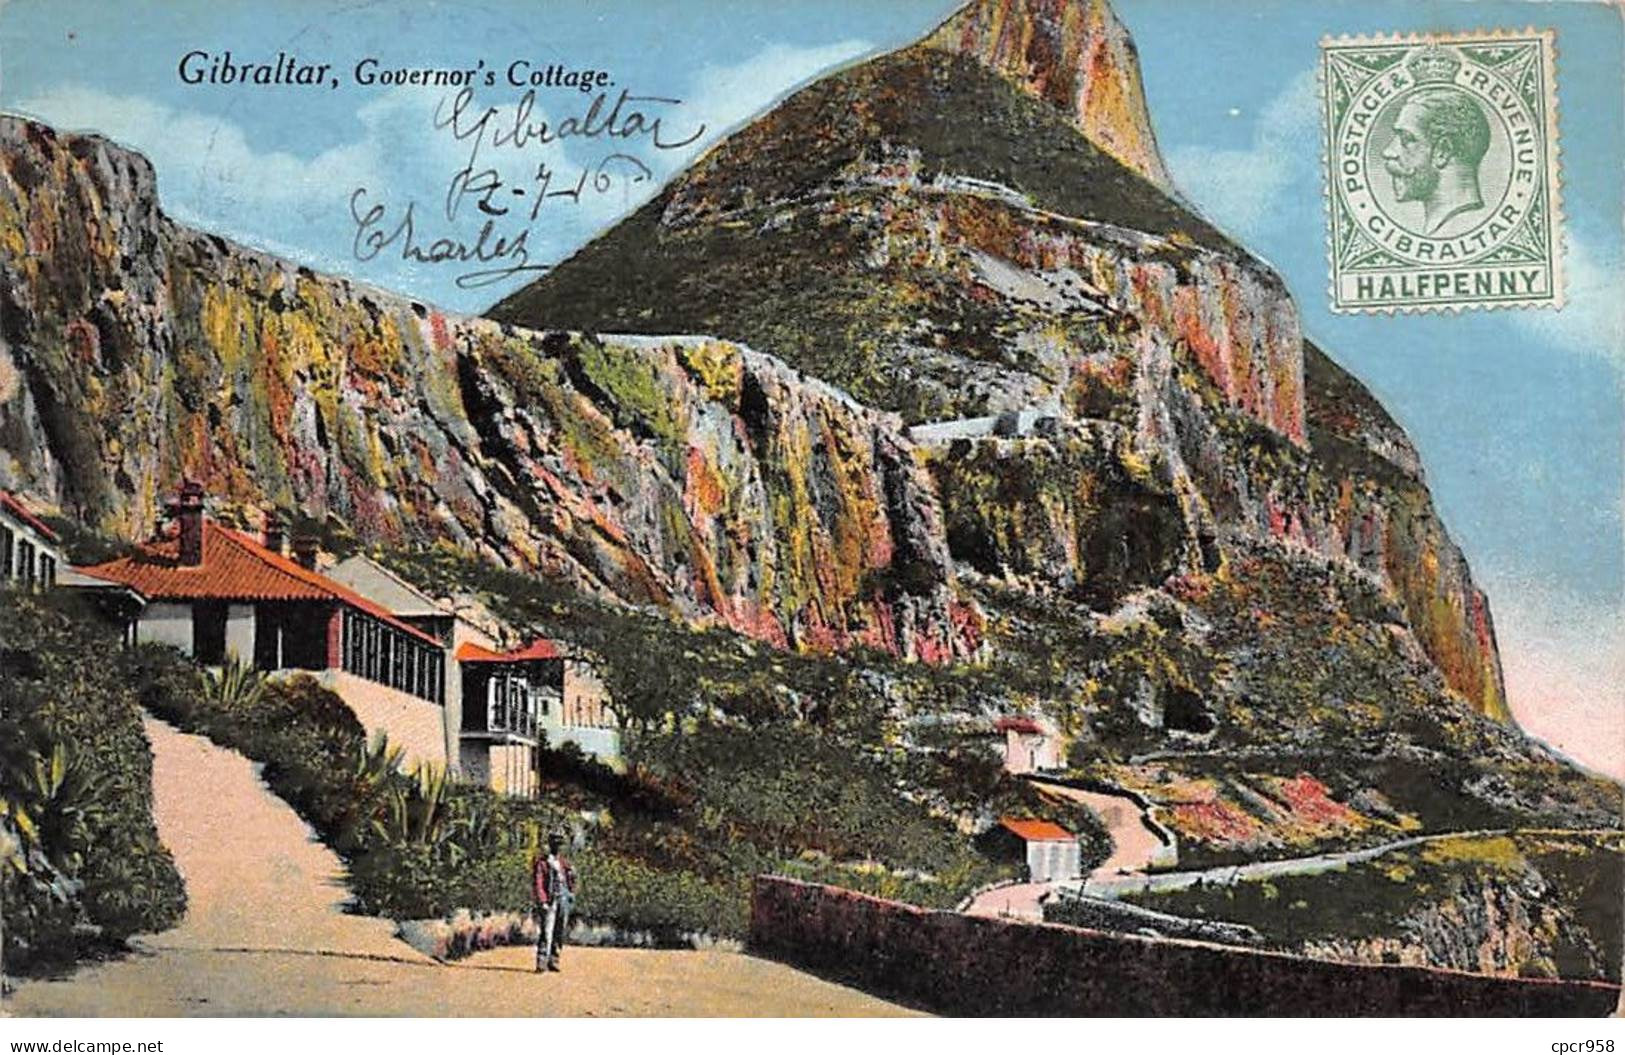 Gibraltar - N°79364 - Governor's Cottage - Gibilterra